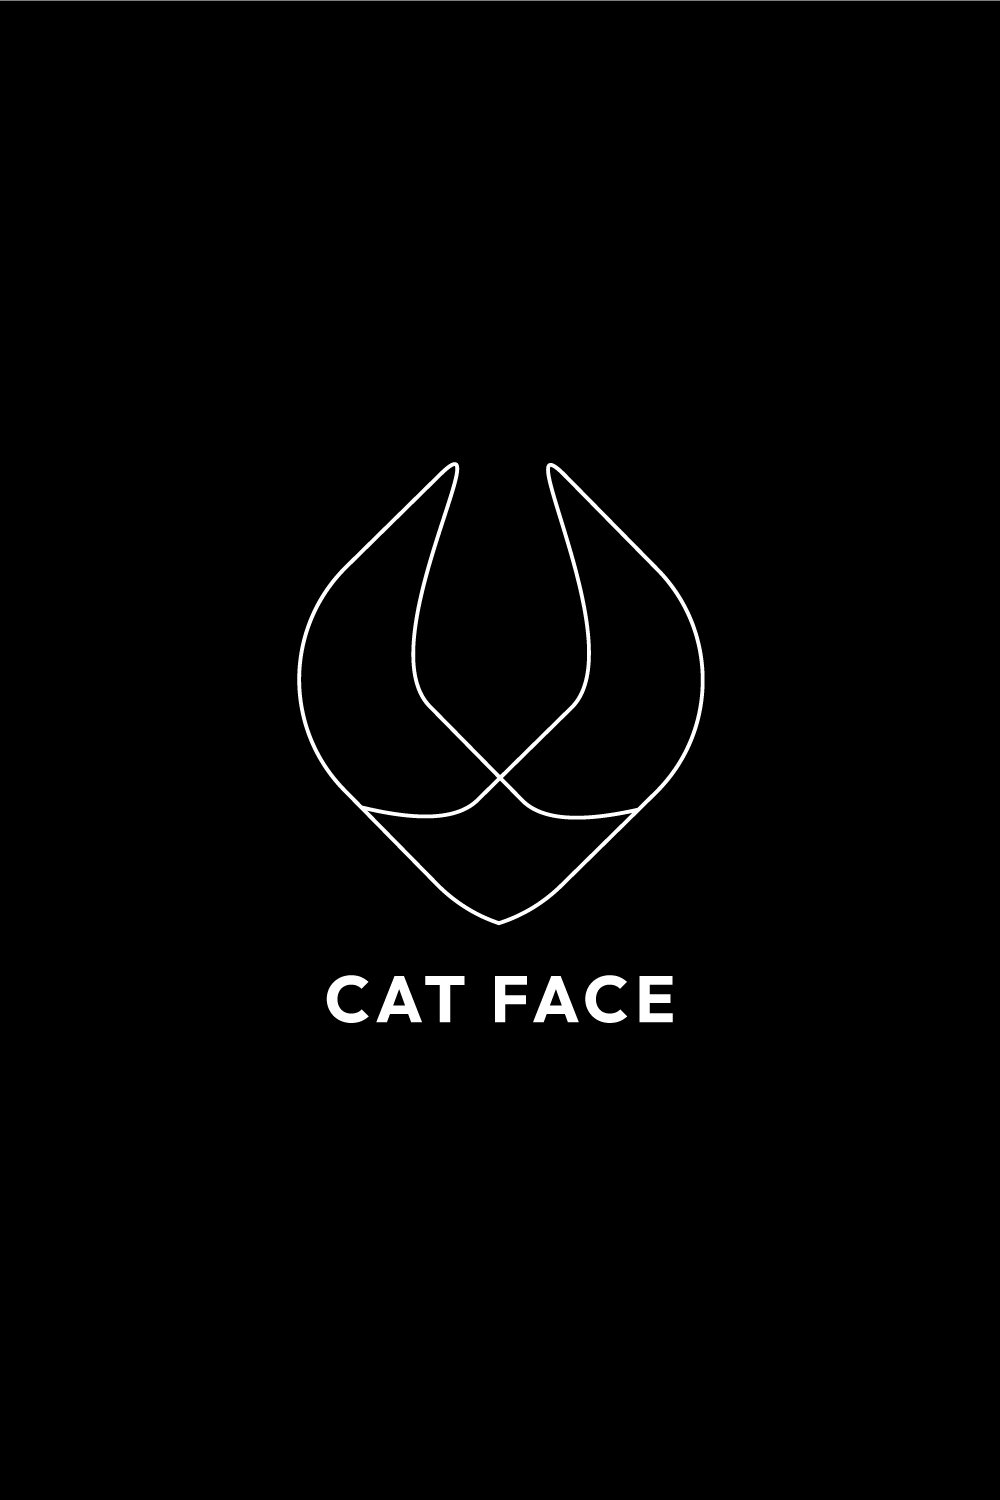 Elegant Line Art Cat Face Logo Design Kit: Perfect for Branding and Marketing! pinterest preview image.